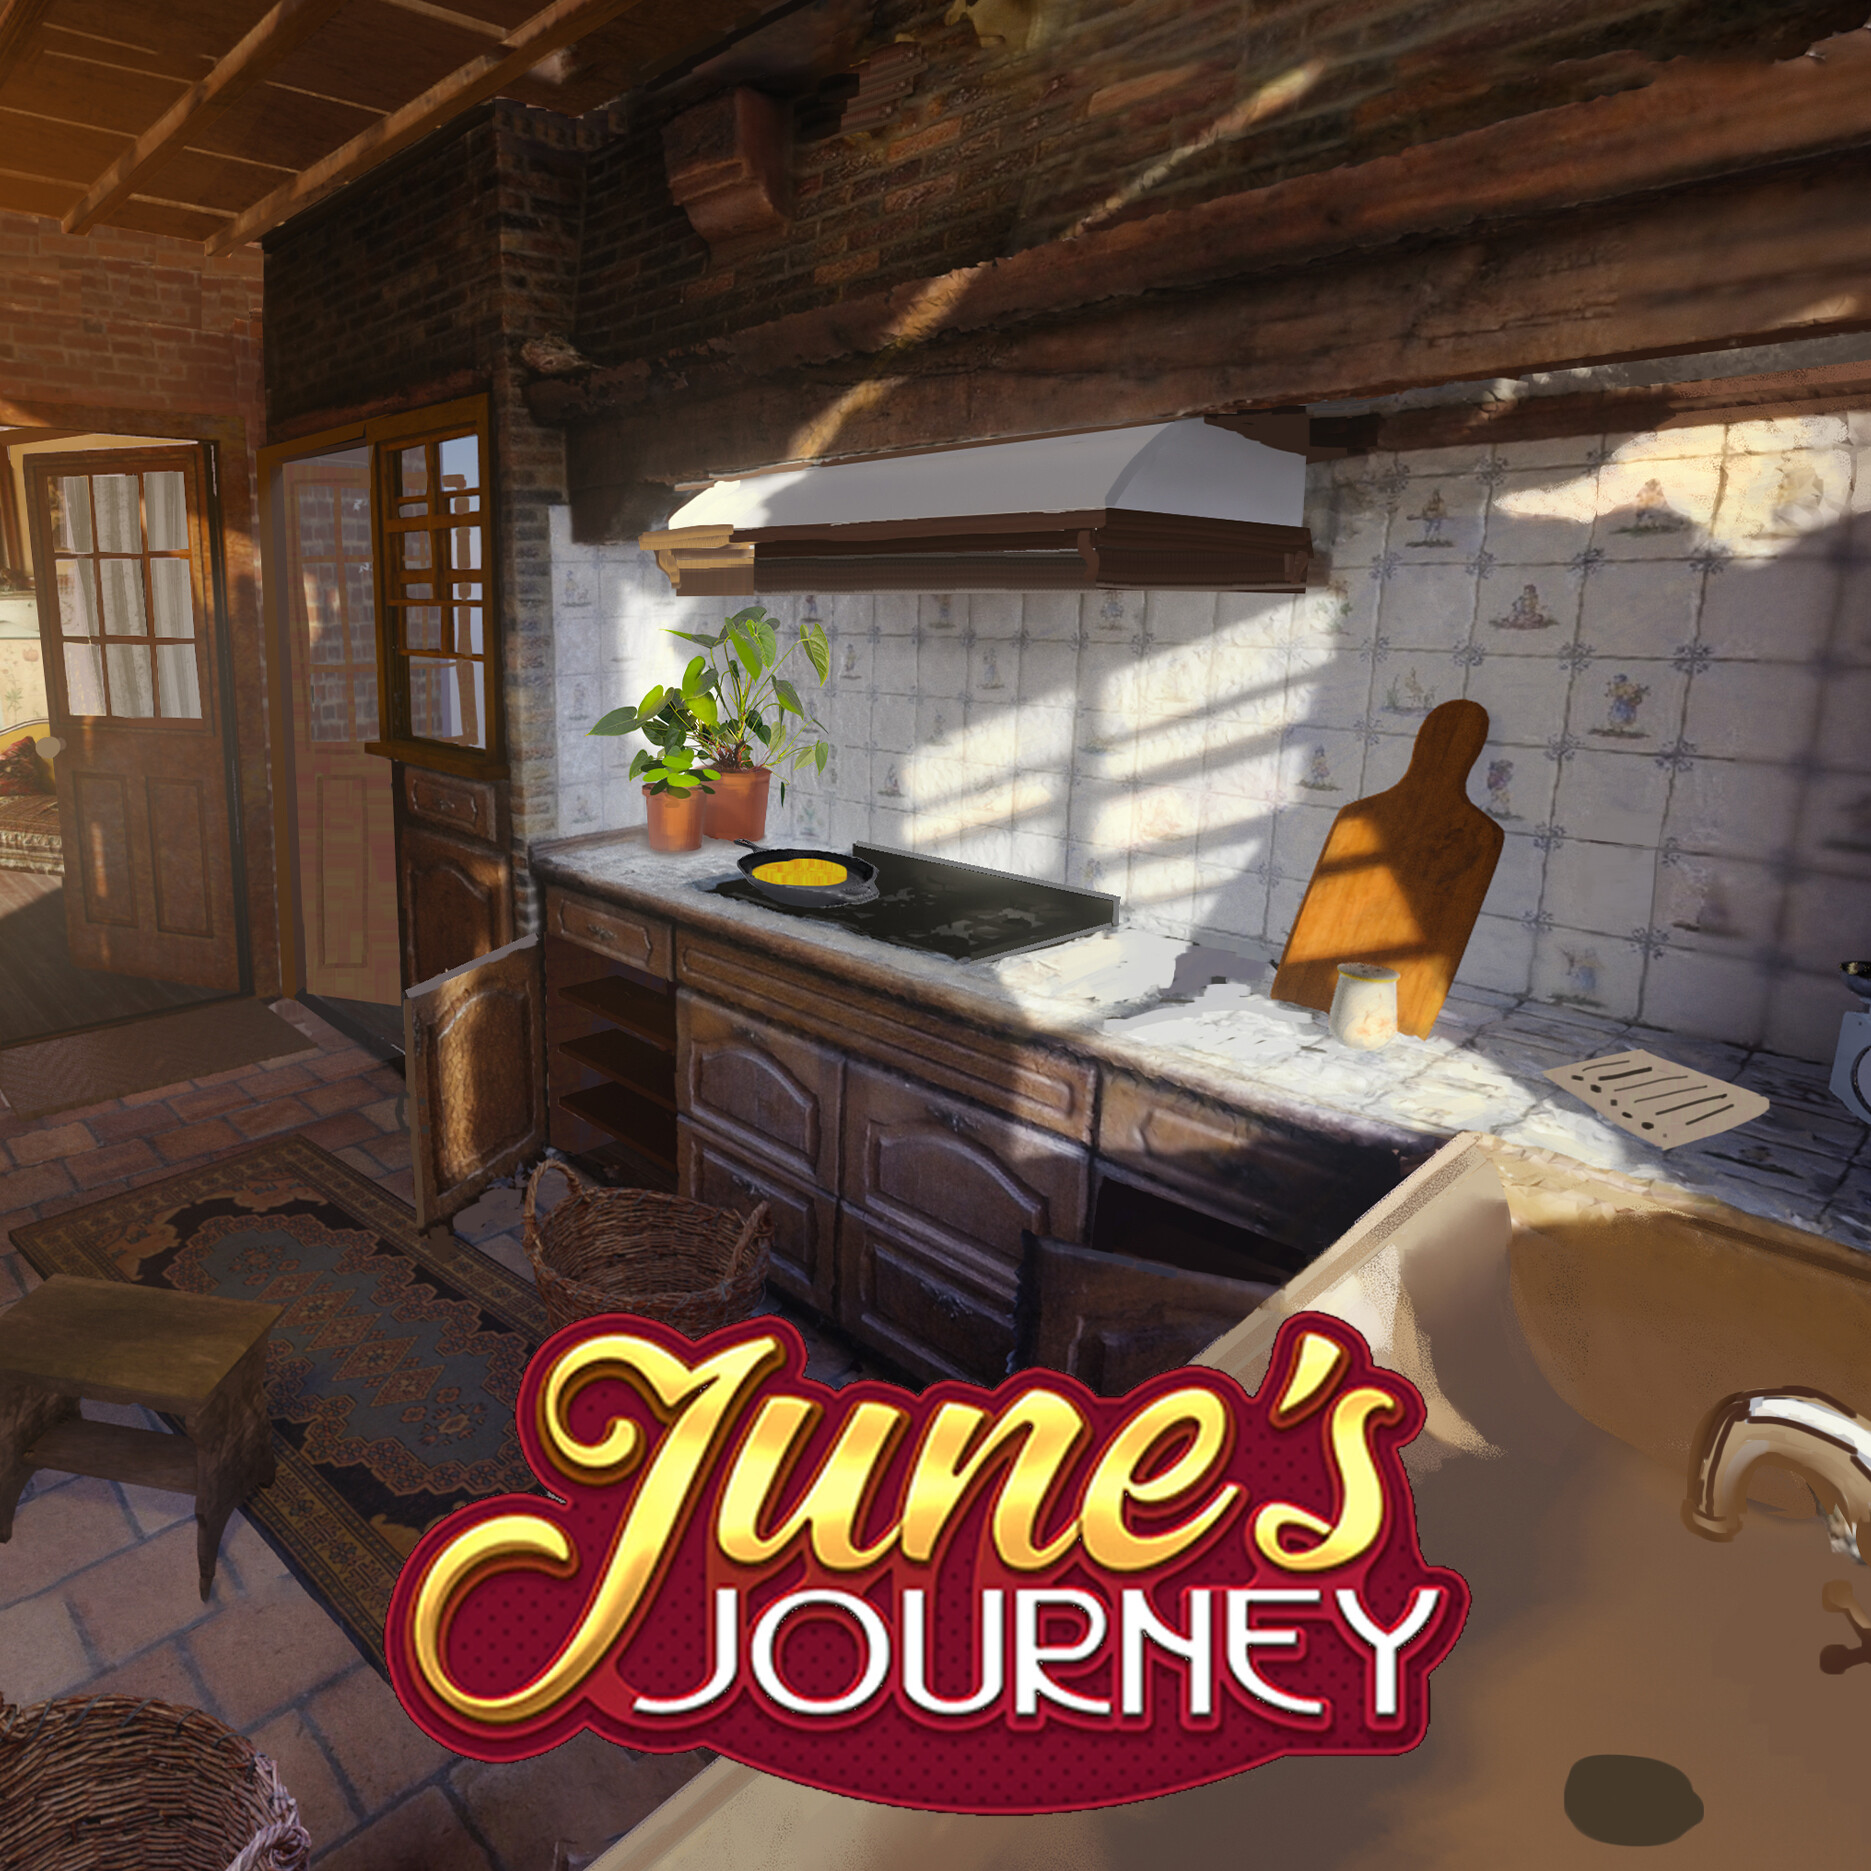 june's journey estate kitchen scene